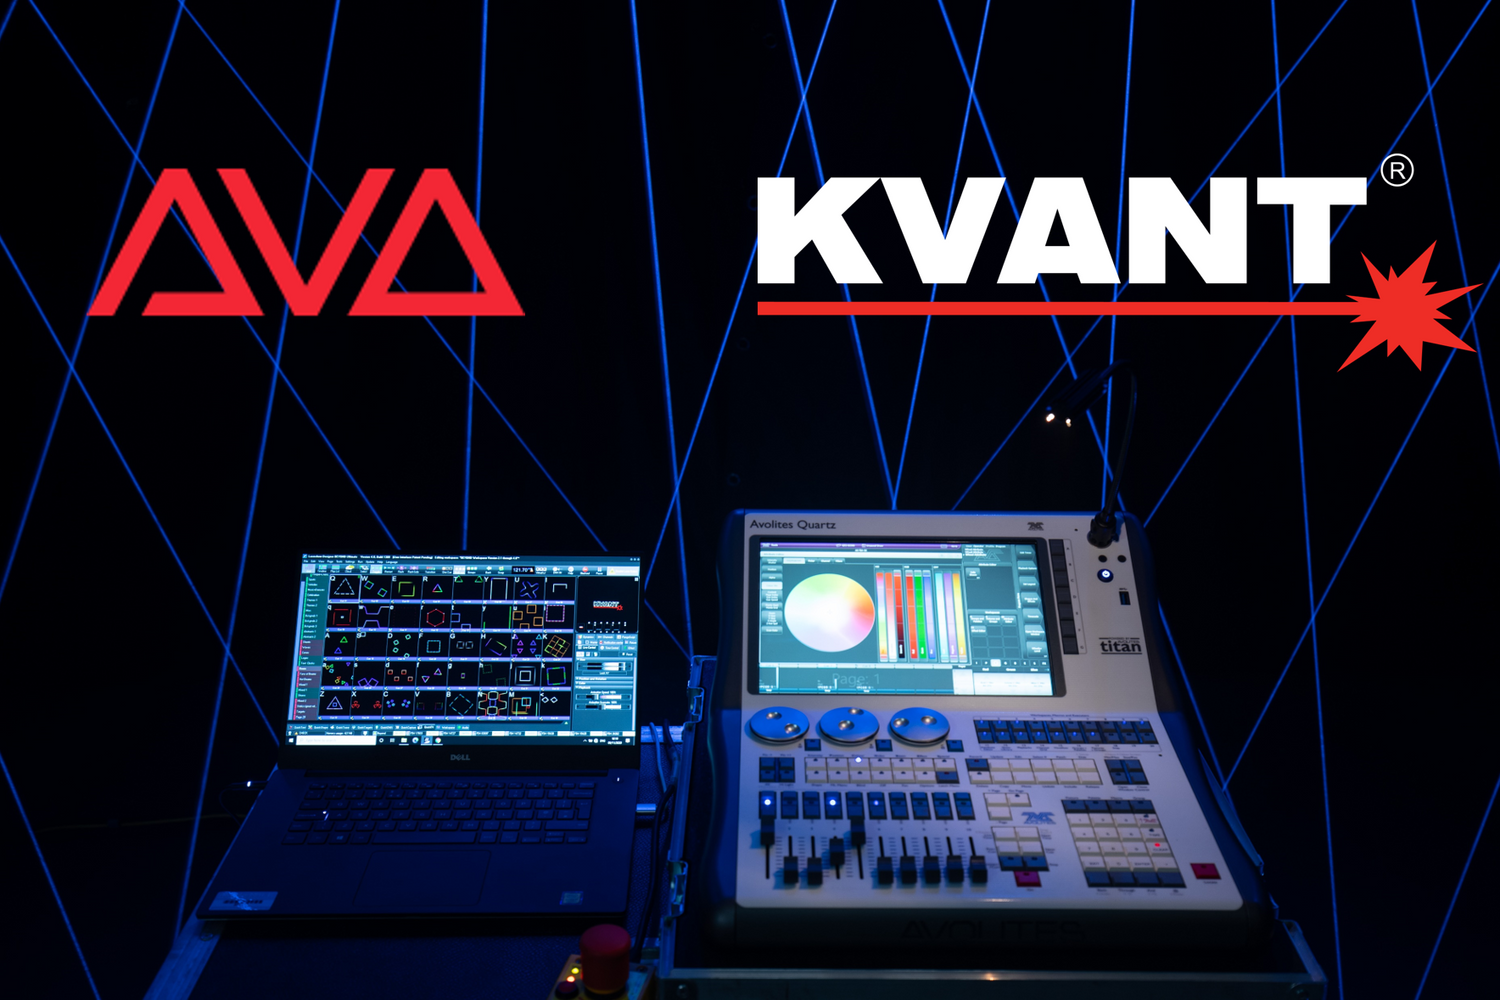 Avolites & Kvant Lasers UK team up to give laser lighting desk control with titan software.